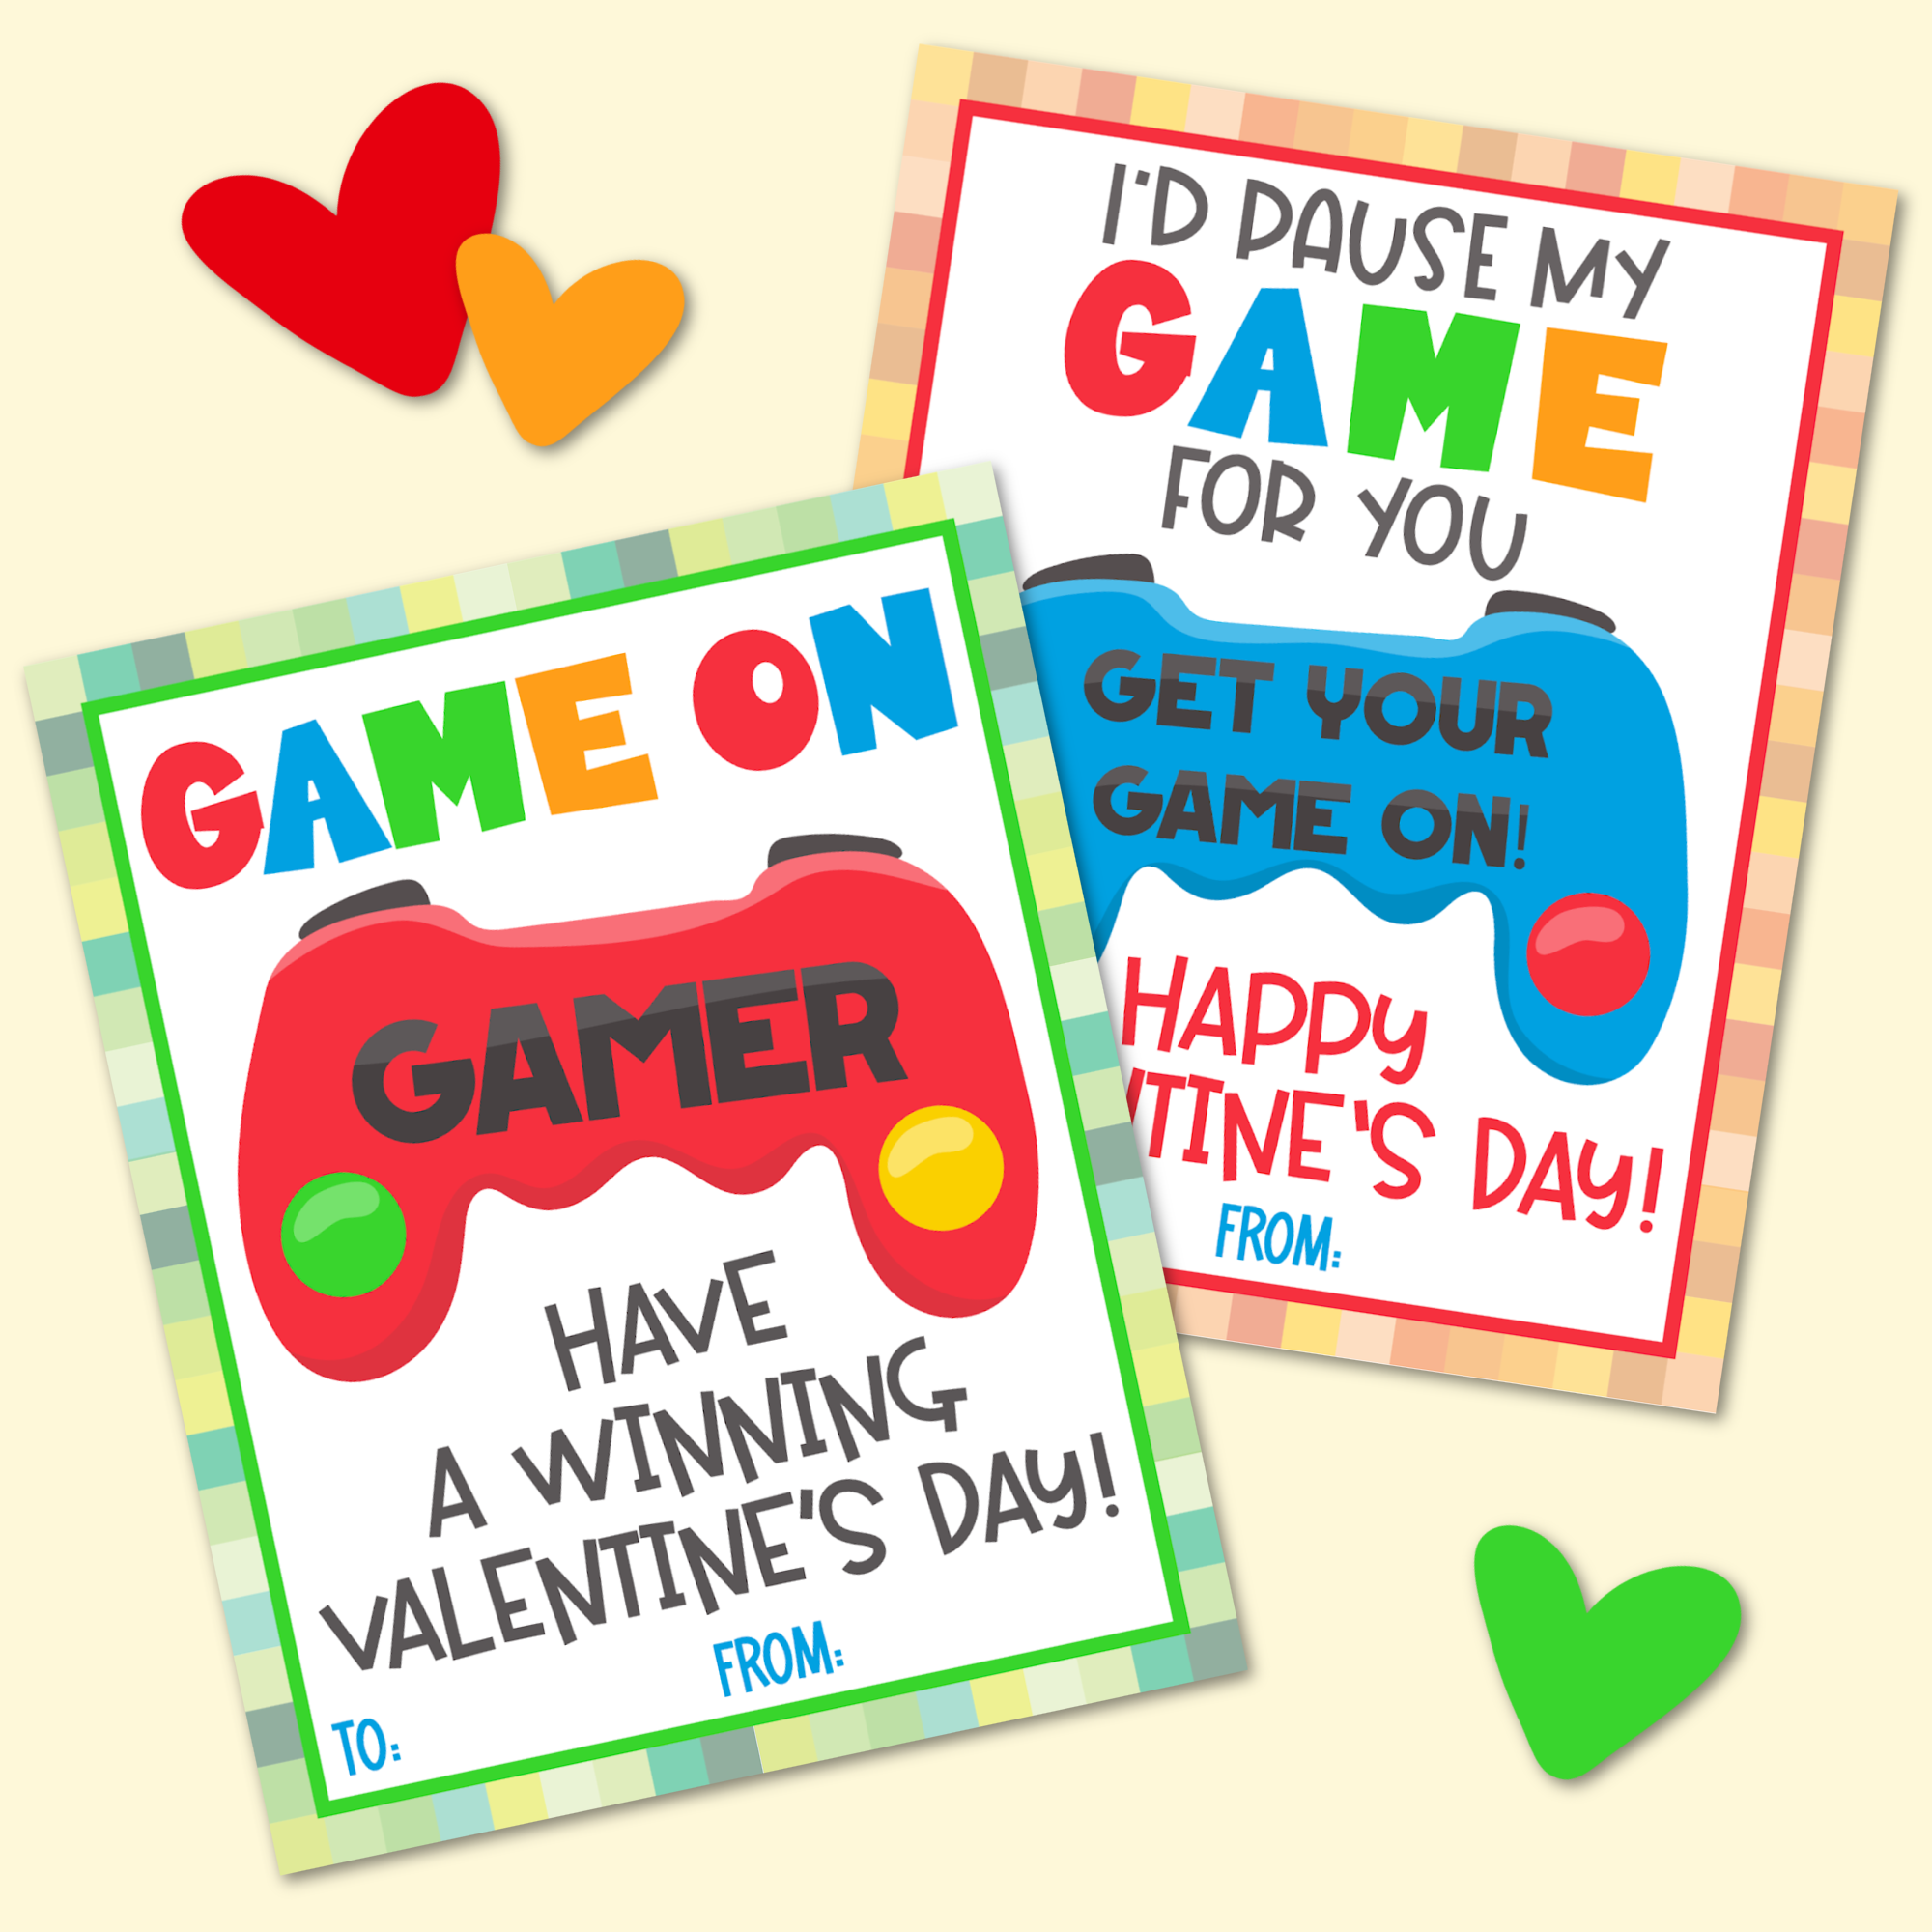 Gamer Valentine's Day Cards Free Printable